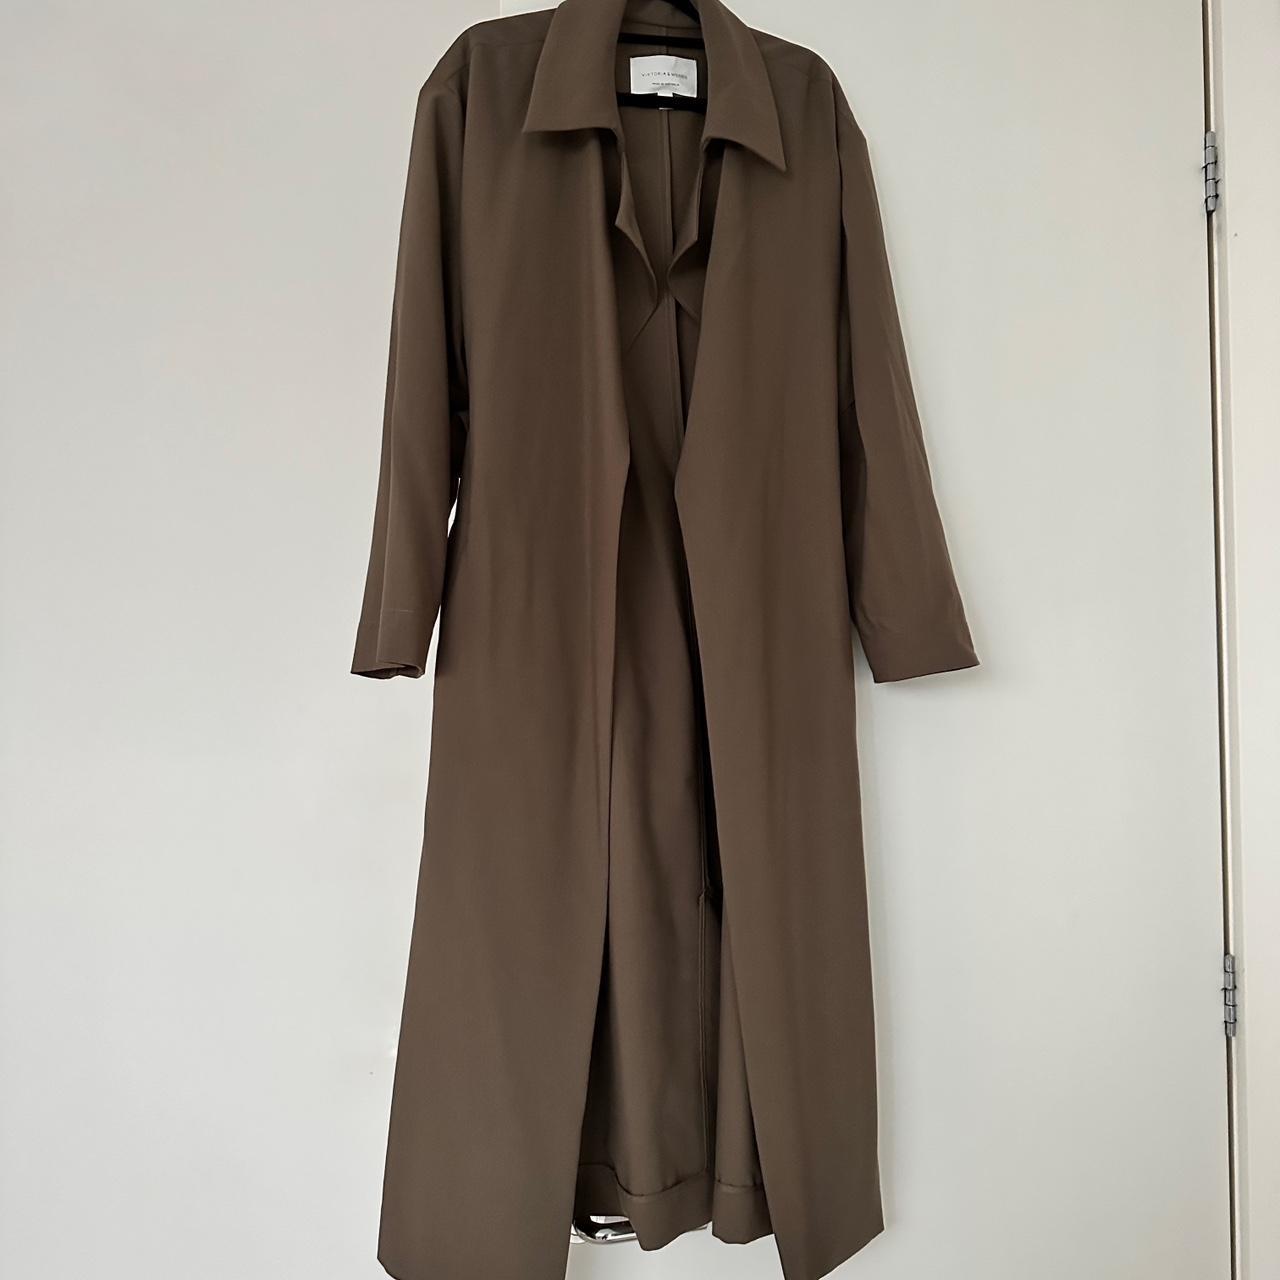 VIKTORIA & WOODS Grant trench coat, size 1 (aus8 8),... - Depop